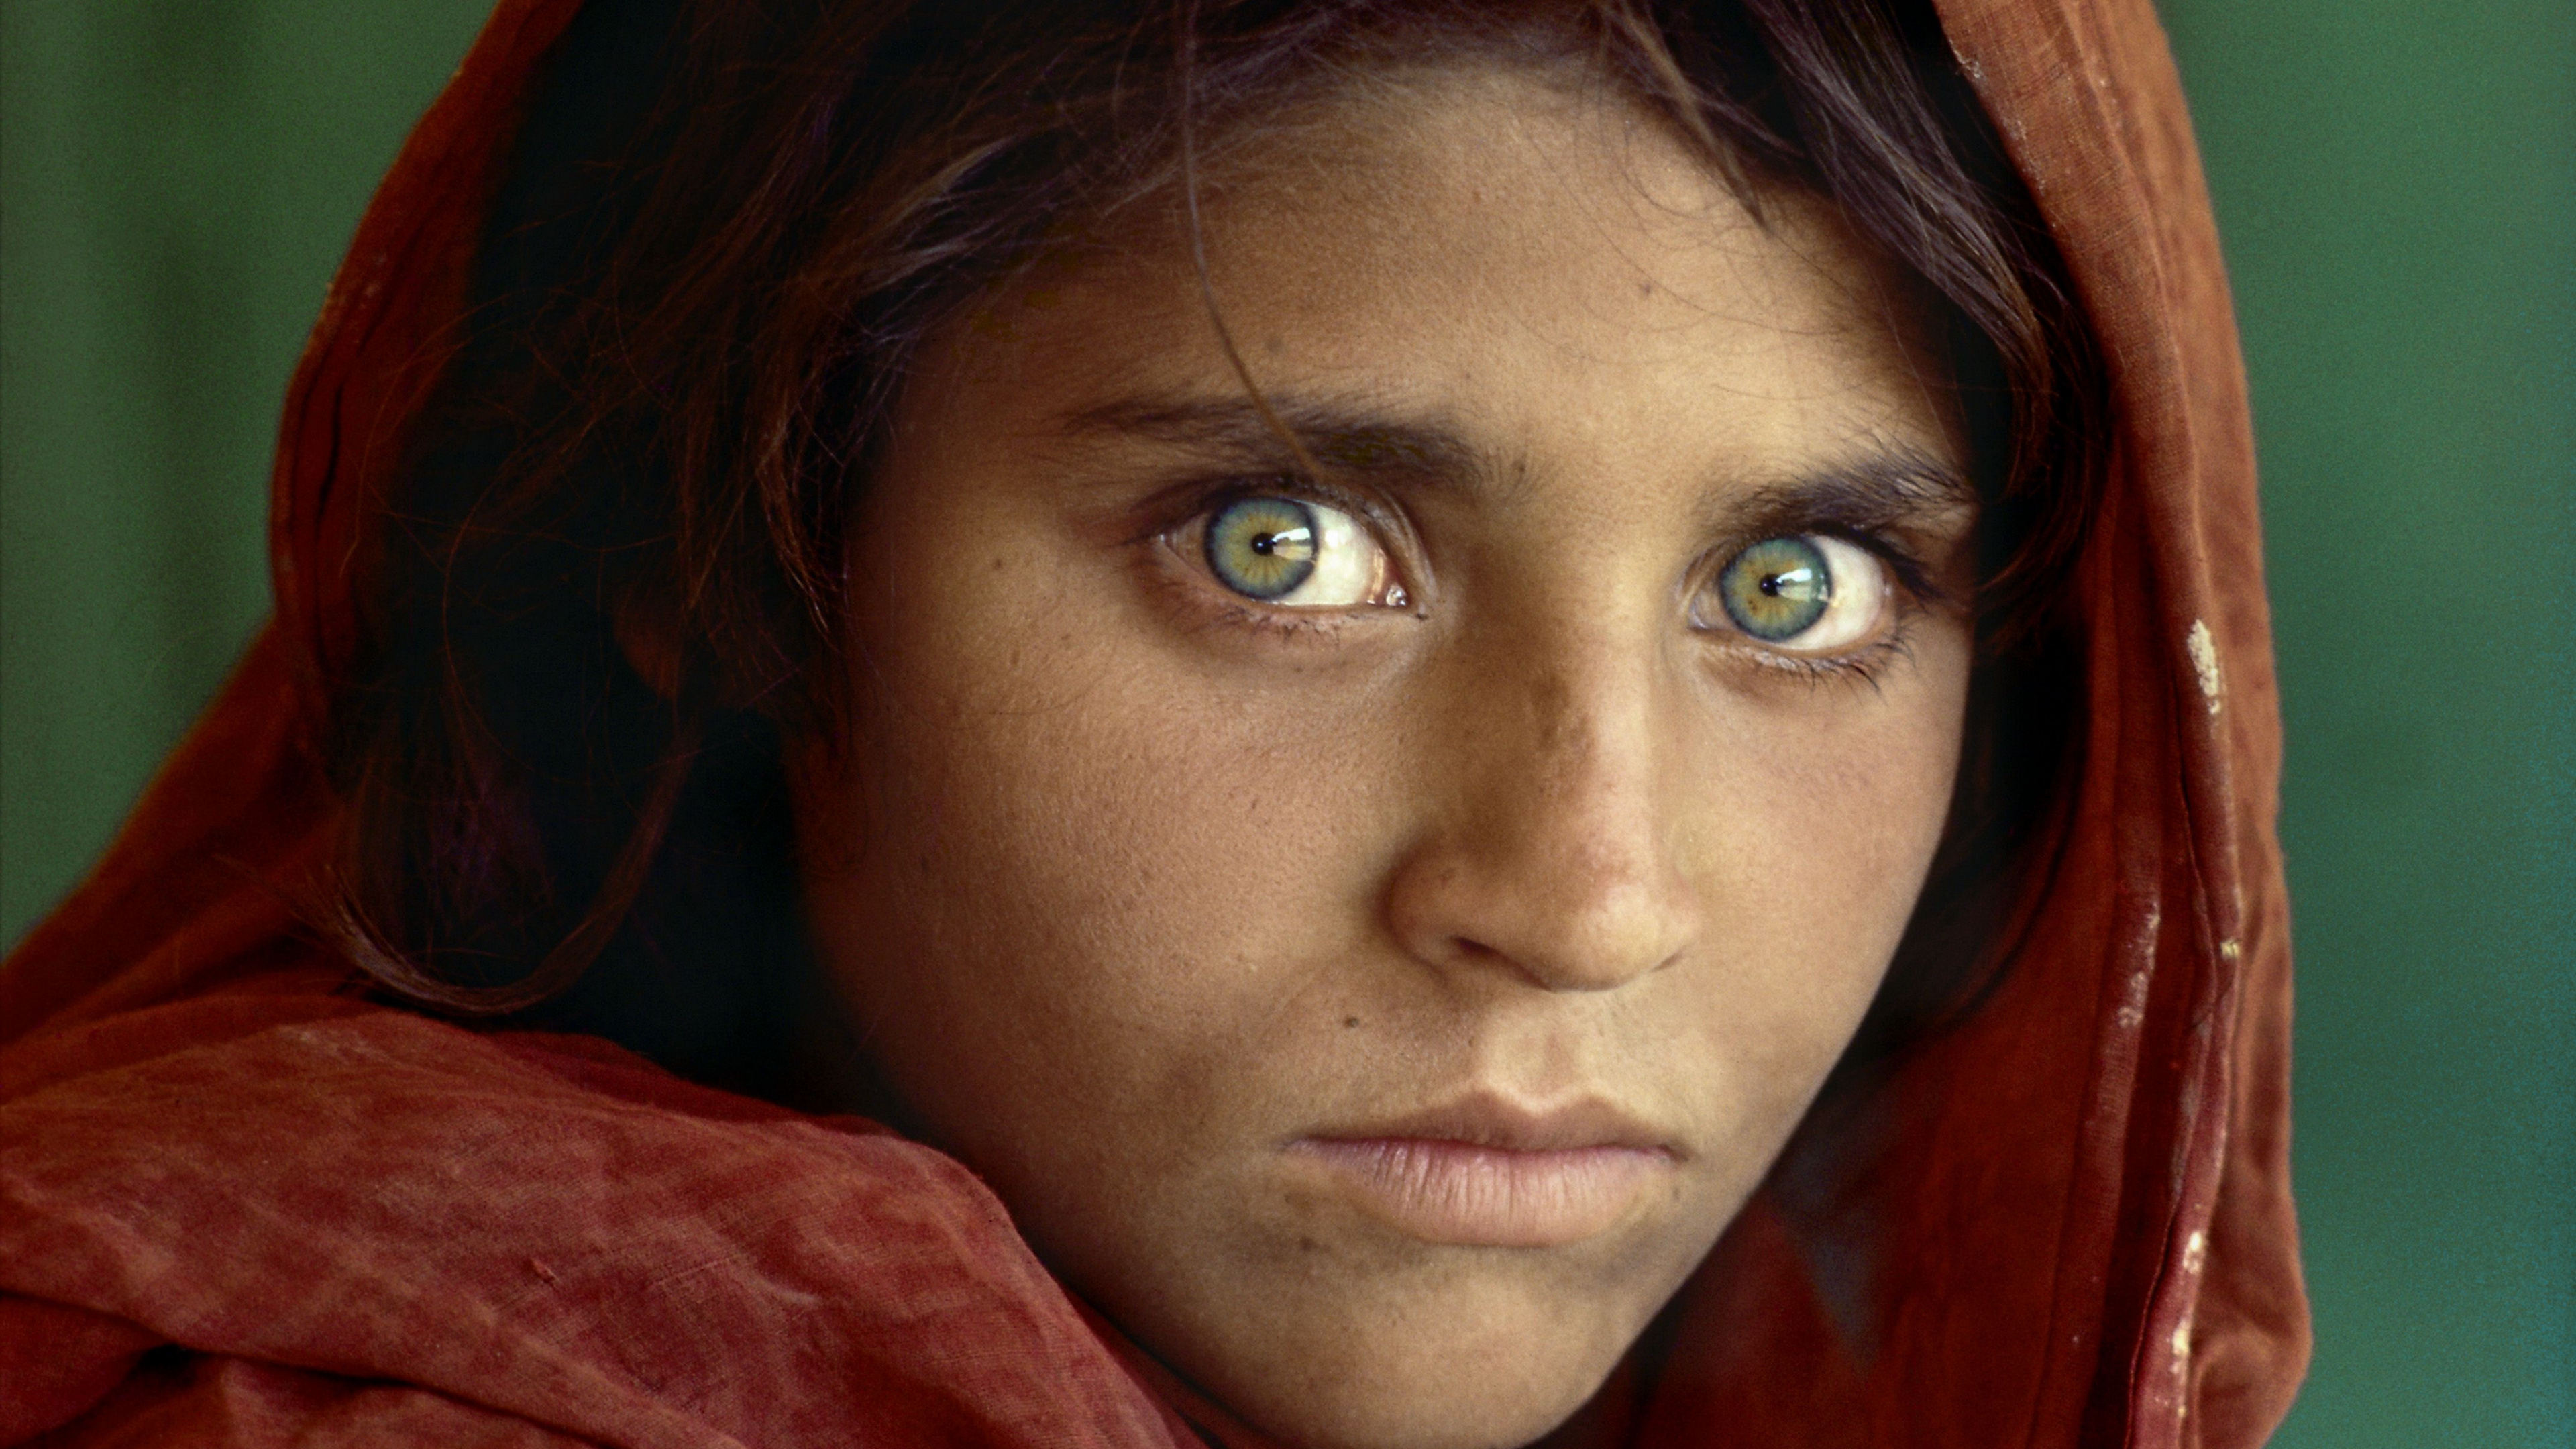 Afghanisches Mädchen, Afghanistan, National Geographic, Gesicht, Auge. Wallpaper in 3840x2160 Resolution